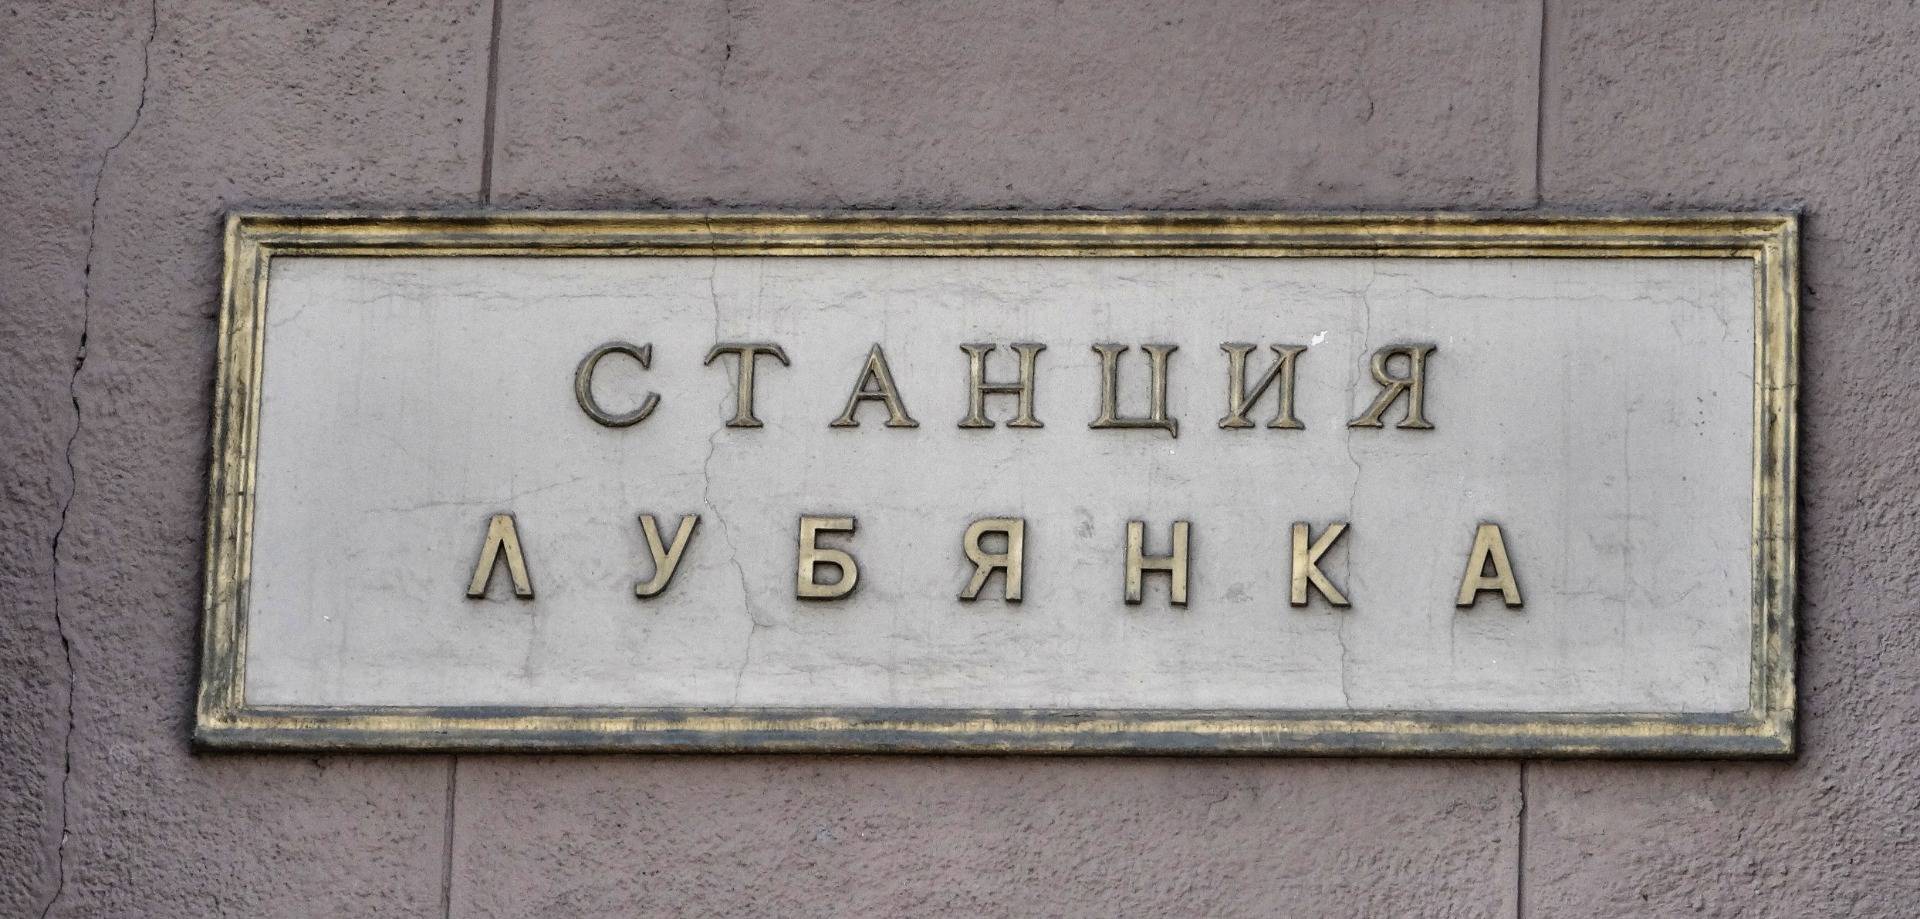 ”Ljubljanka” means the headquarter of the cruel secret service KGB